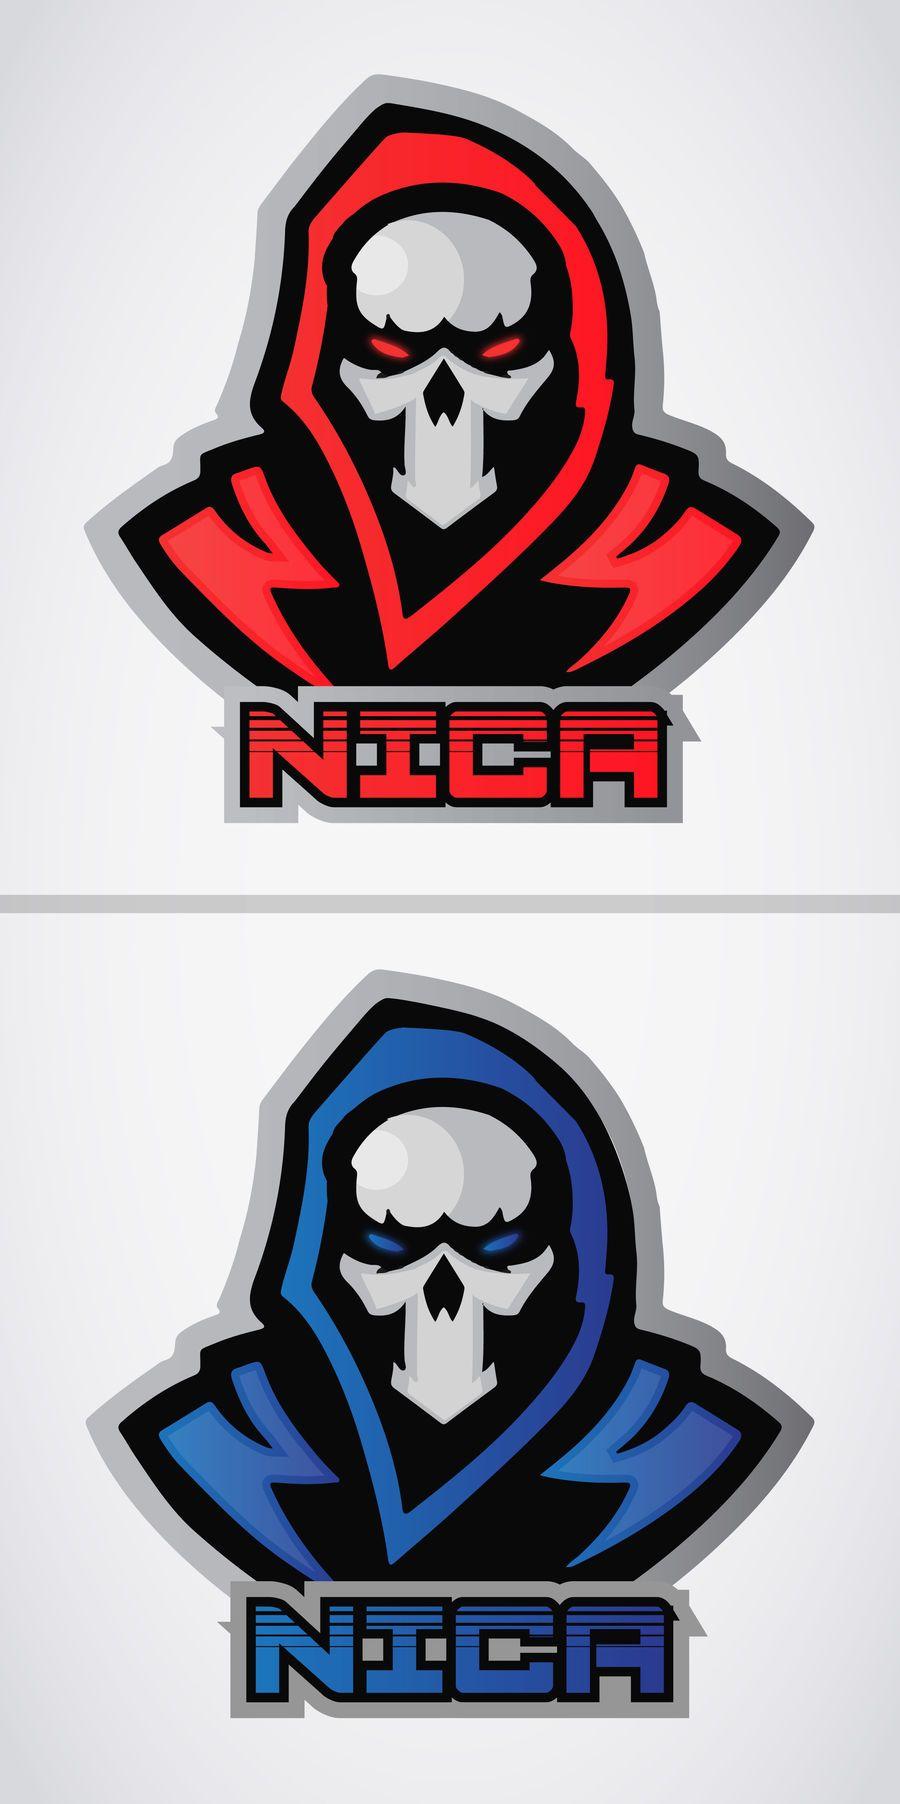 Necr Logo - Entry by HussamH for I need a gamer logo